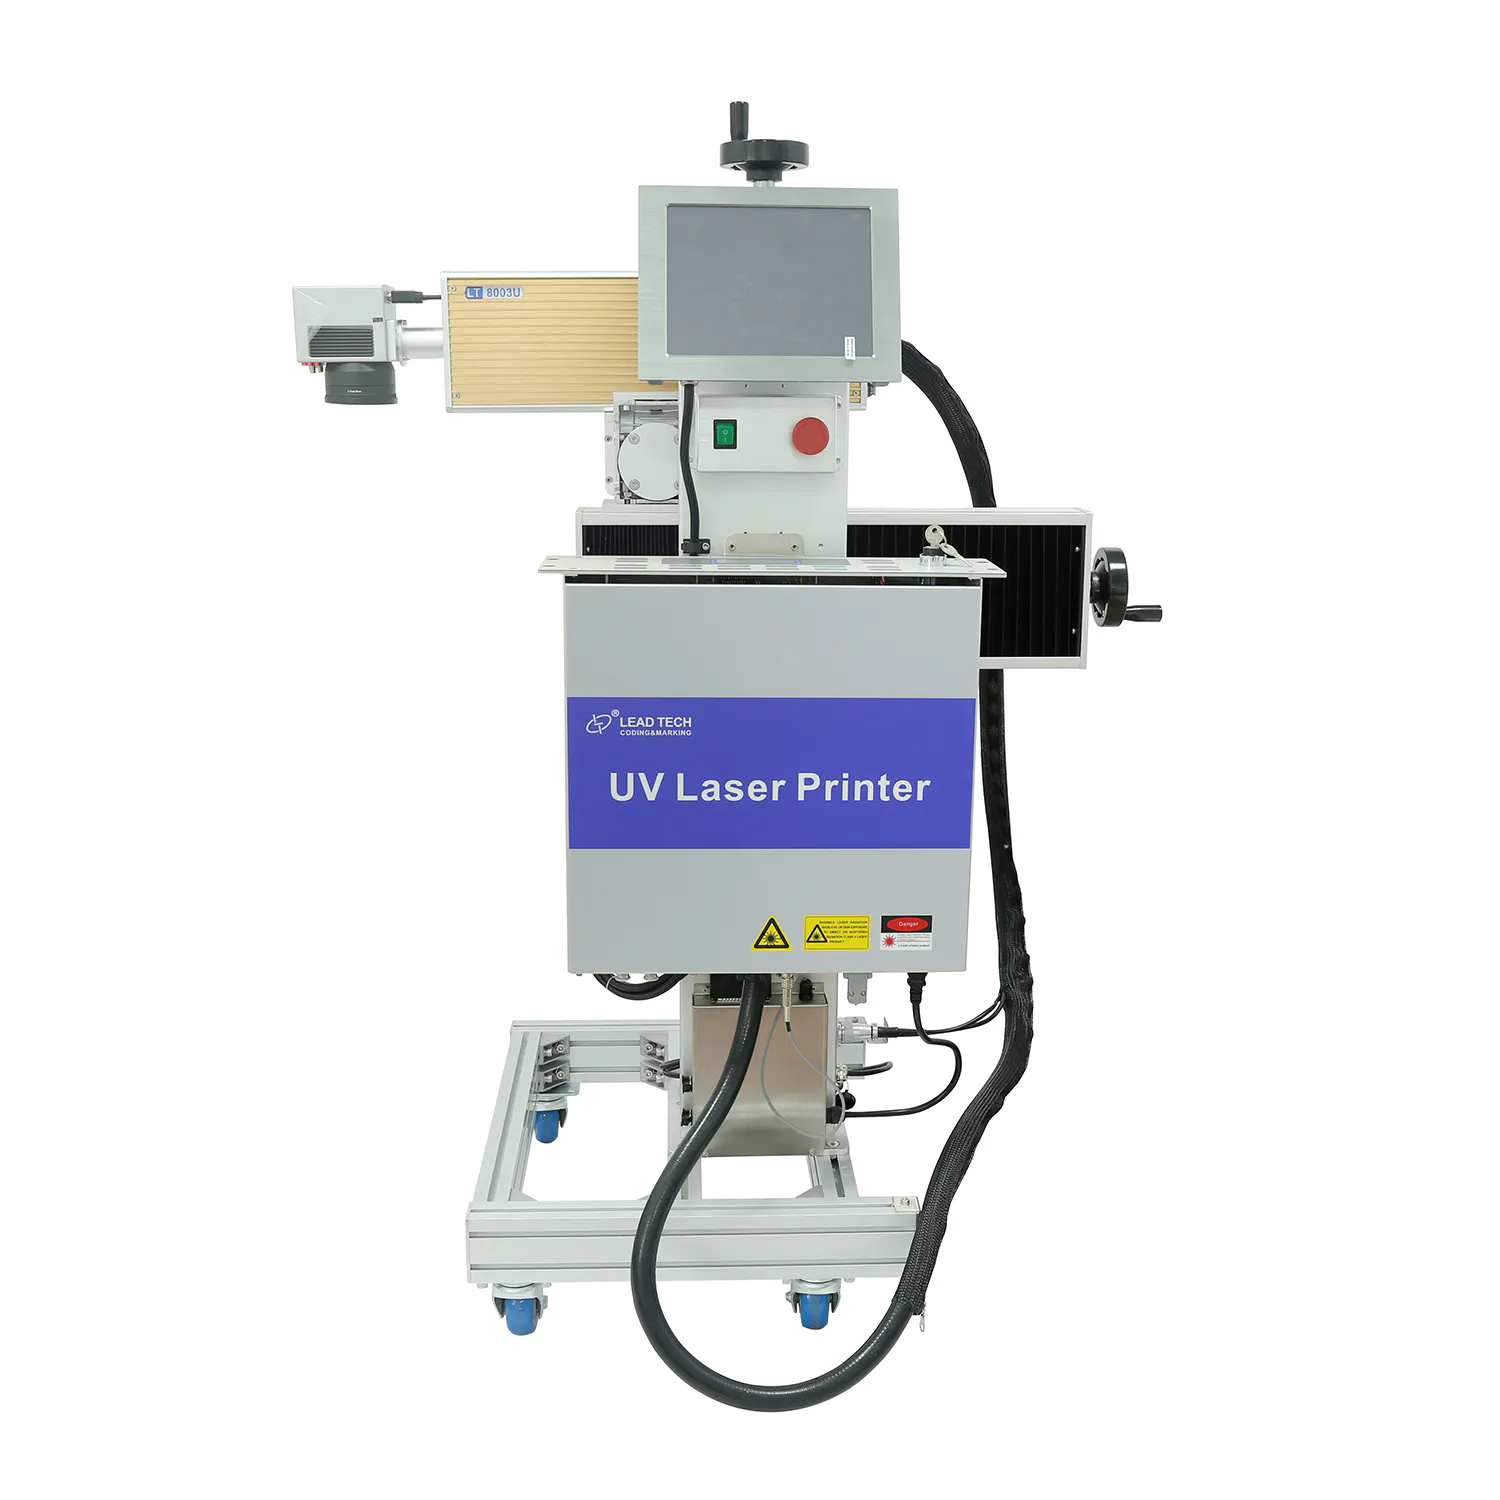 Lead Tech Lt8003u/Lt8005u UV 3W/5W High Precision Laser Printer for Stainless Steel Printing